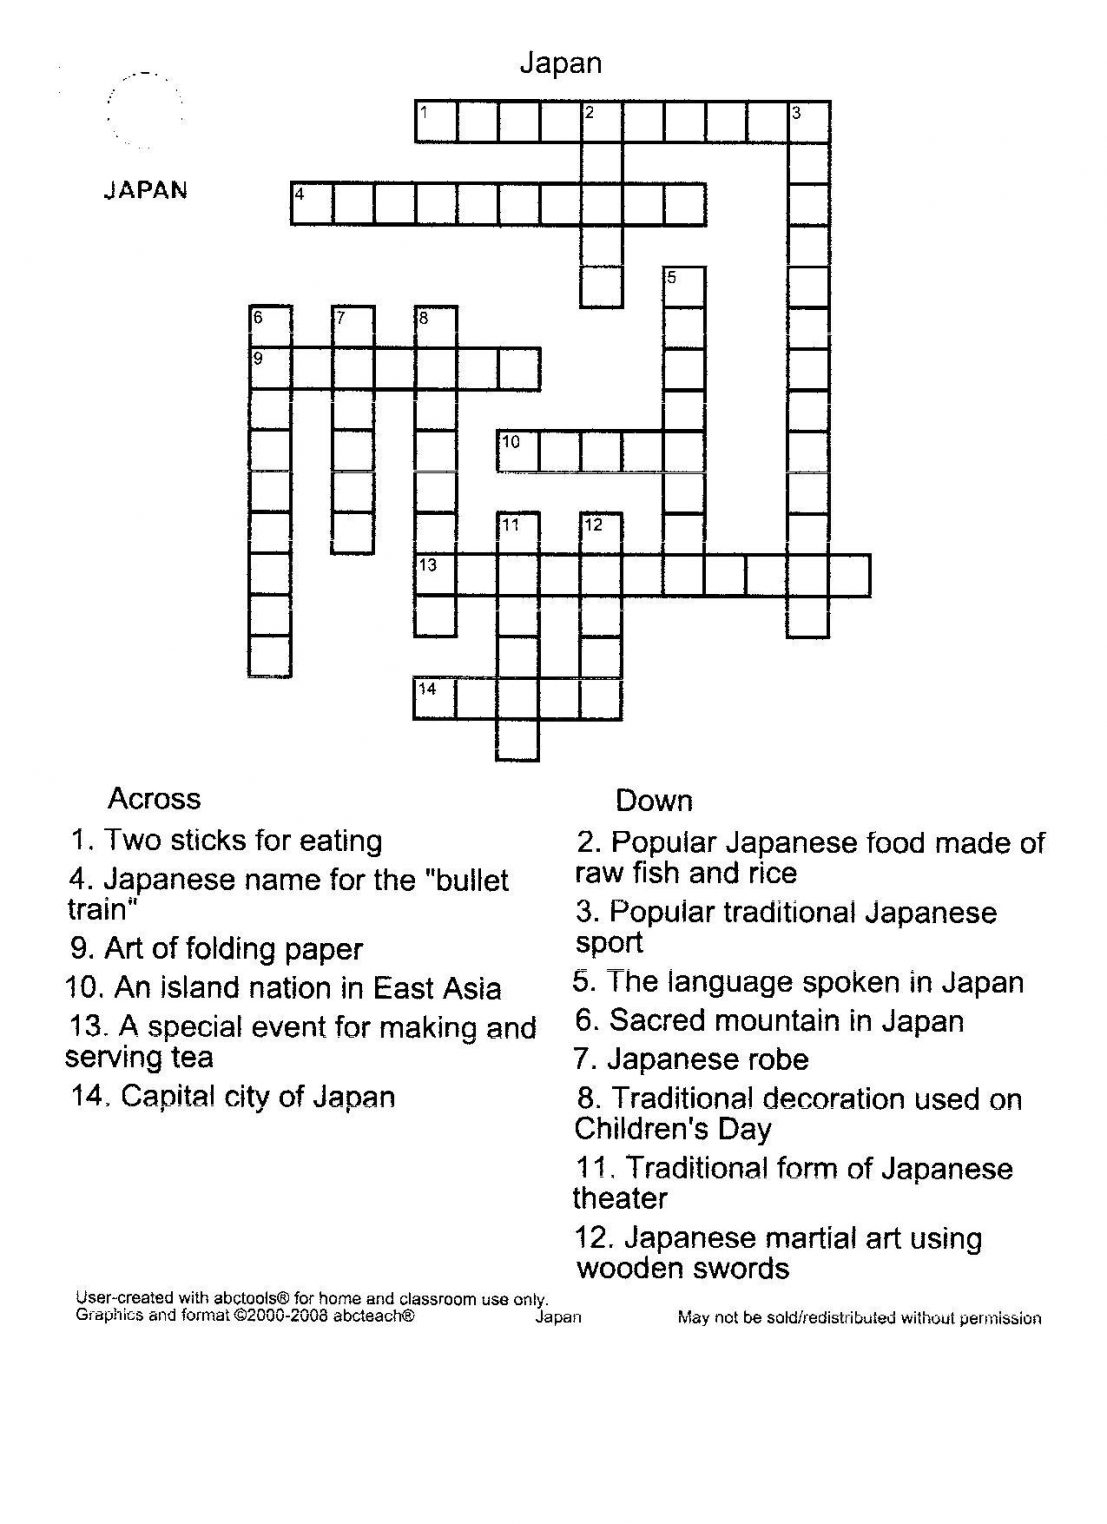 Free Crossword Puzzle Maker Printable - Hashtag Bg - Free Crossword - Crossword Puzzle Maker Printable